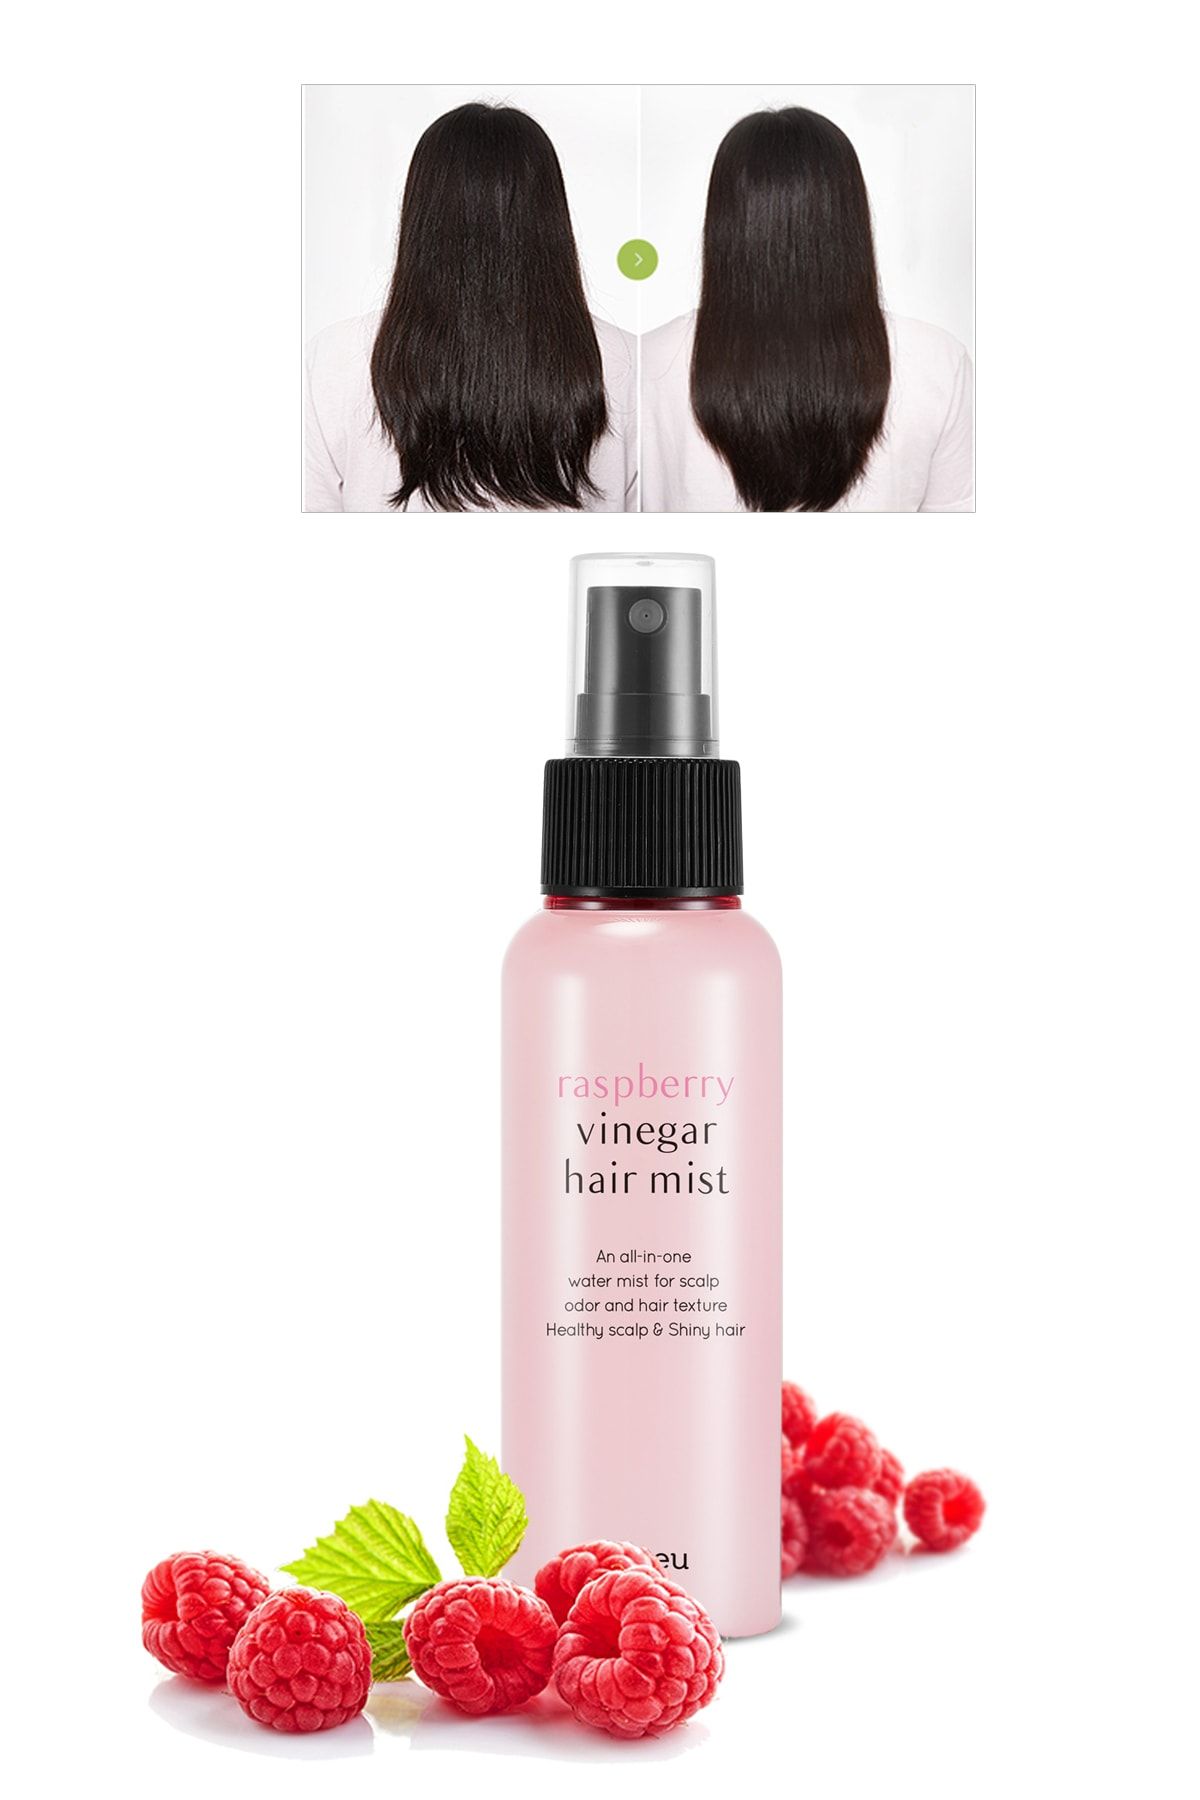 Missha Saçlara Parlak Görünüm Veren Sprey Ahududu Saç Misti 105ml Raspberry Vinegar Hair Mist